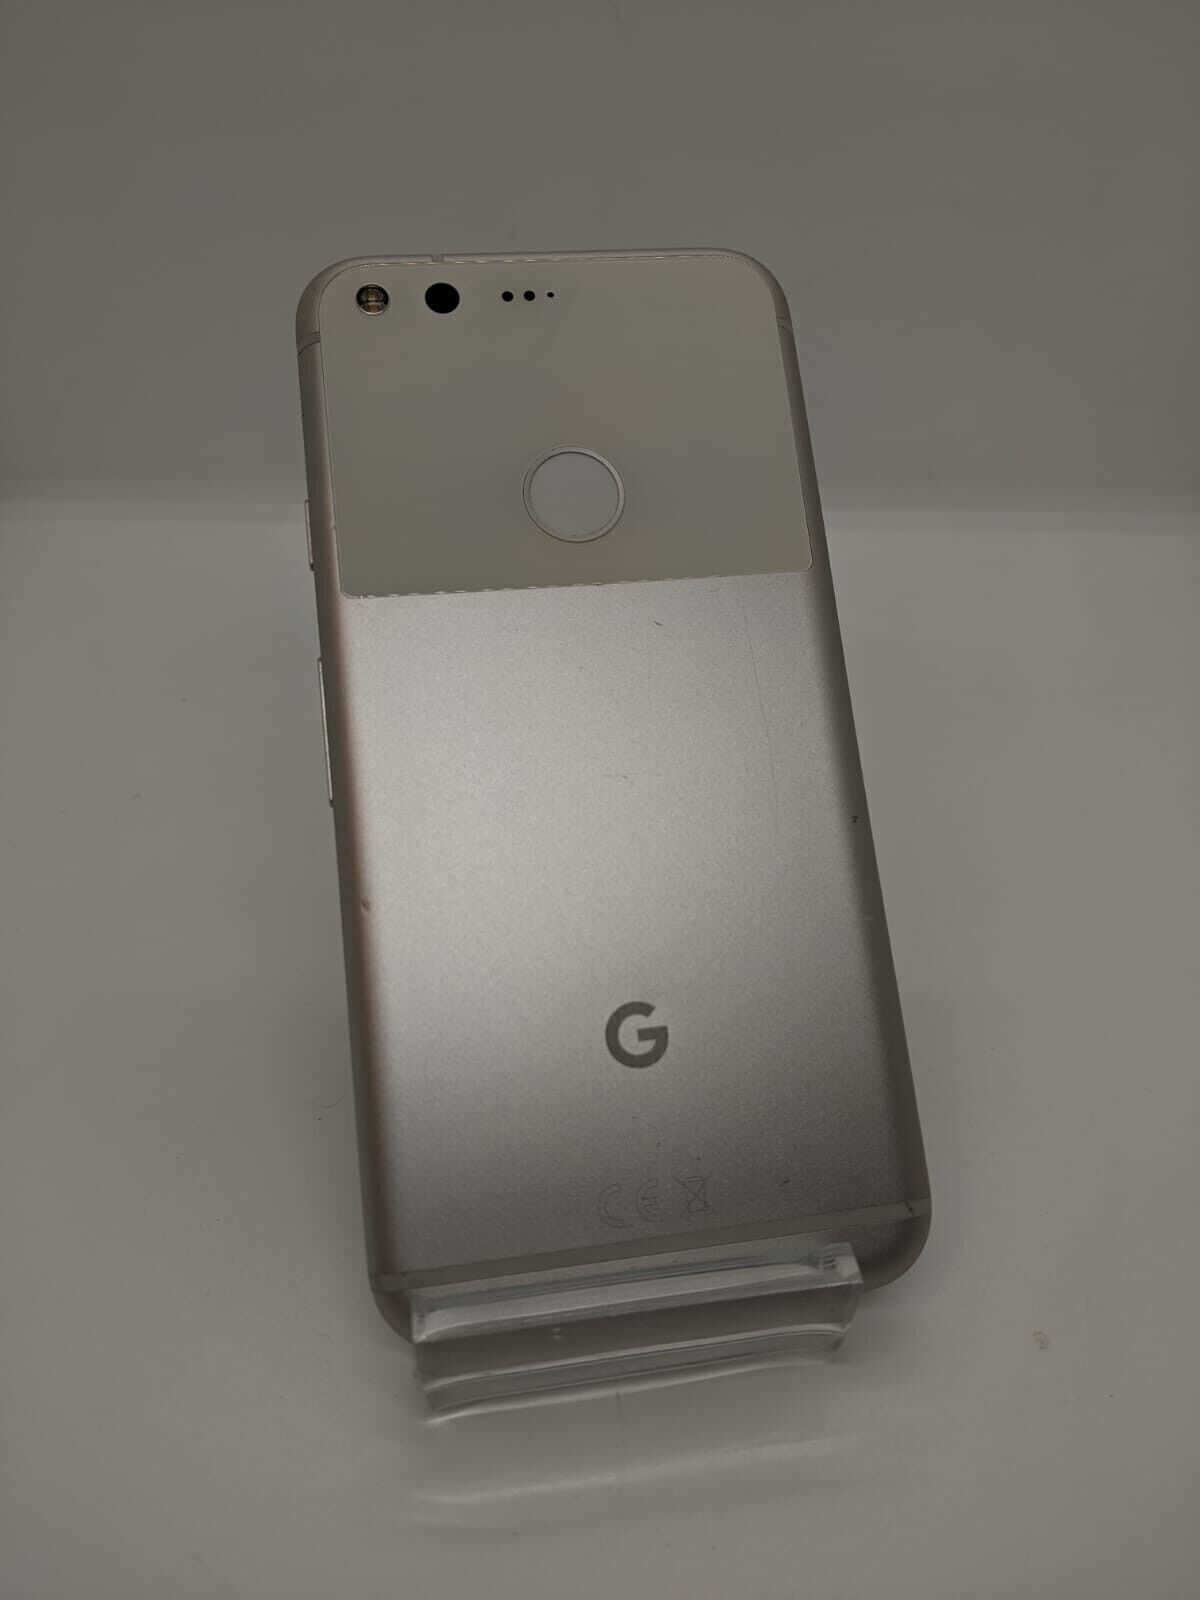 Google Pixel 32GB Unlocked Silver Smartphone Unlockable Bootloader New Battery!